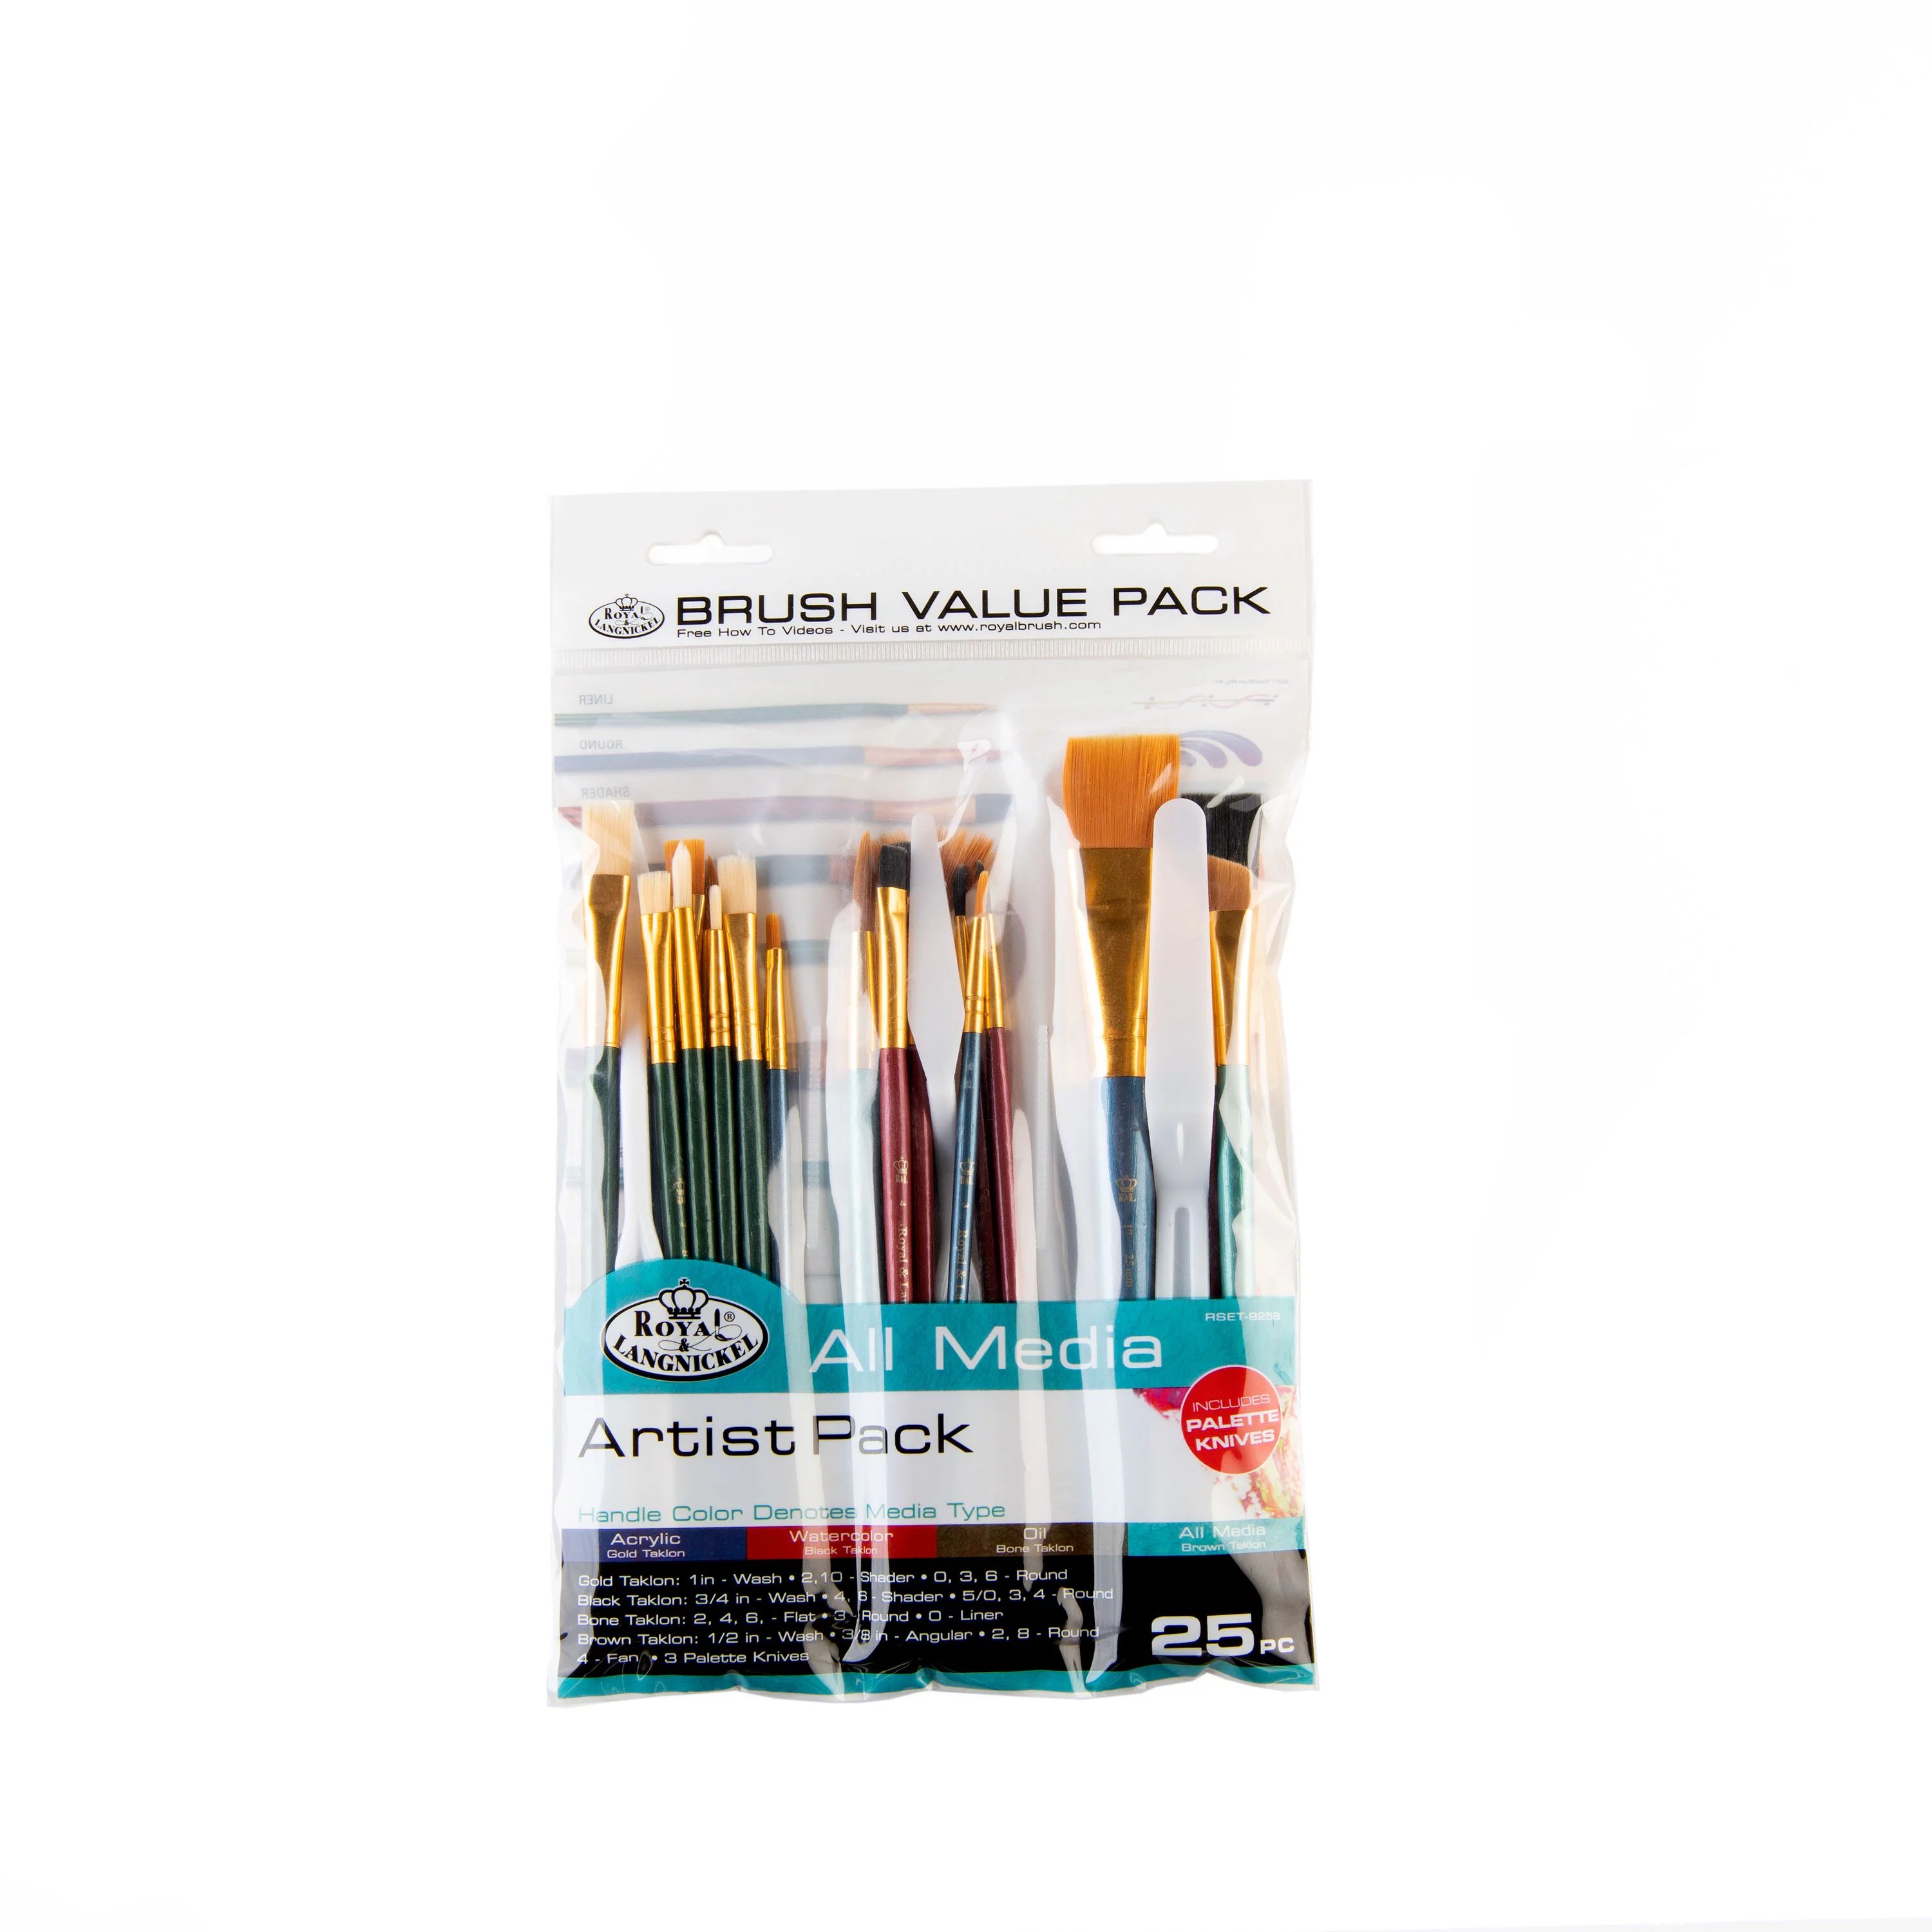 Royal & Langnickel All Media Variety Taklon Wood Handle Paint Brush Value Pack, 25pc | Walmart (US)